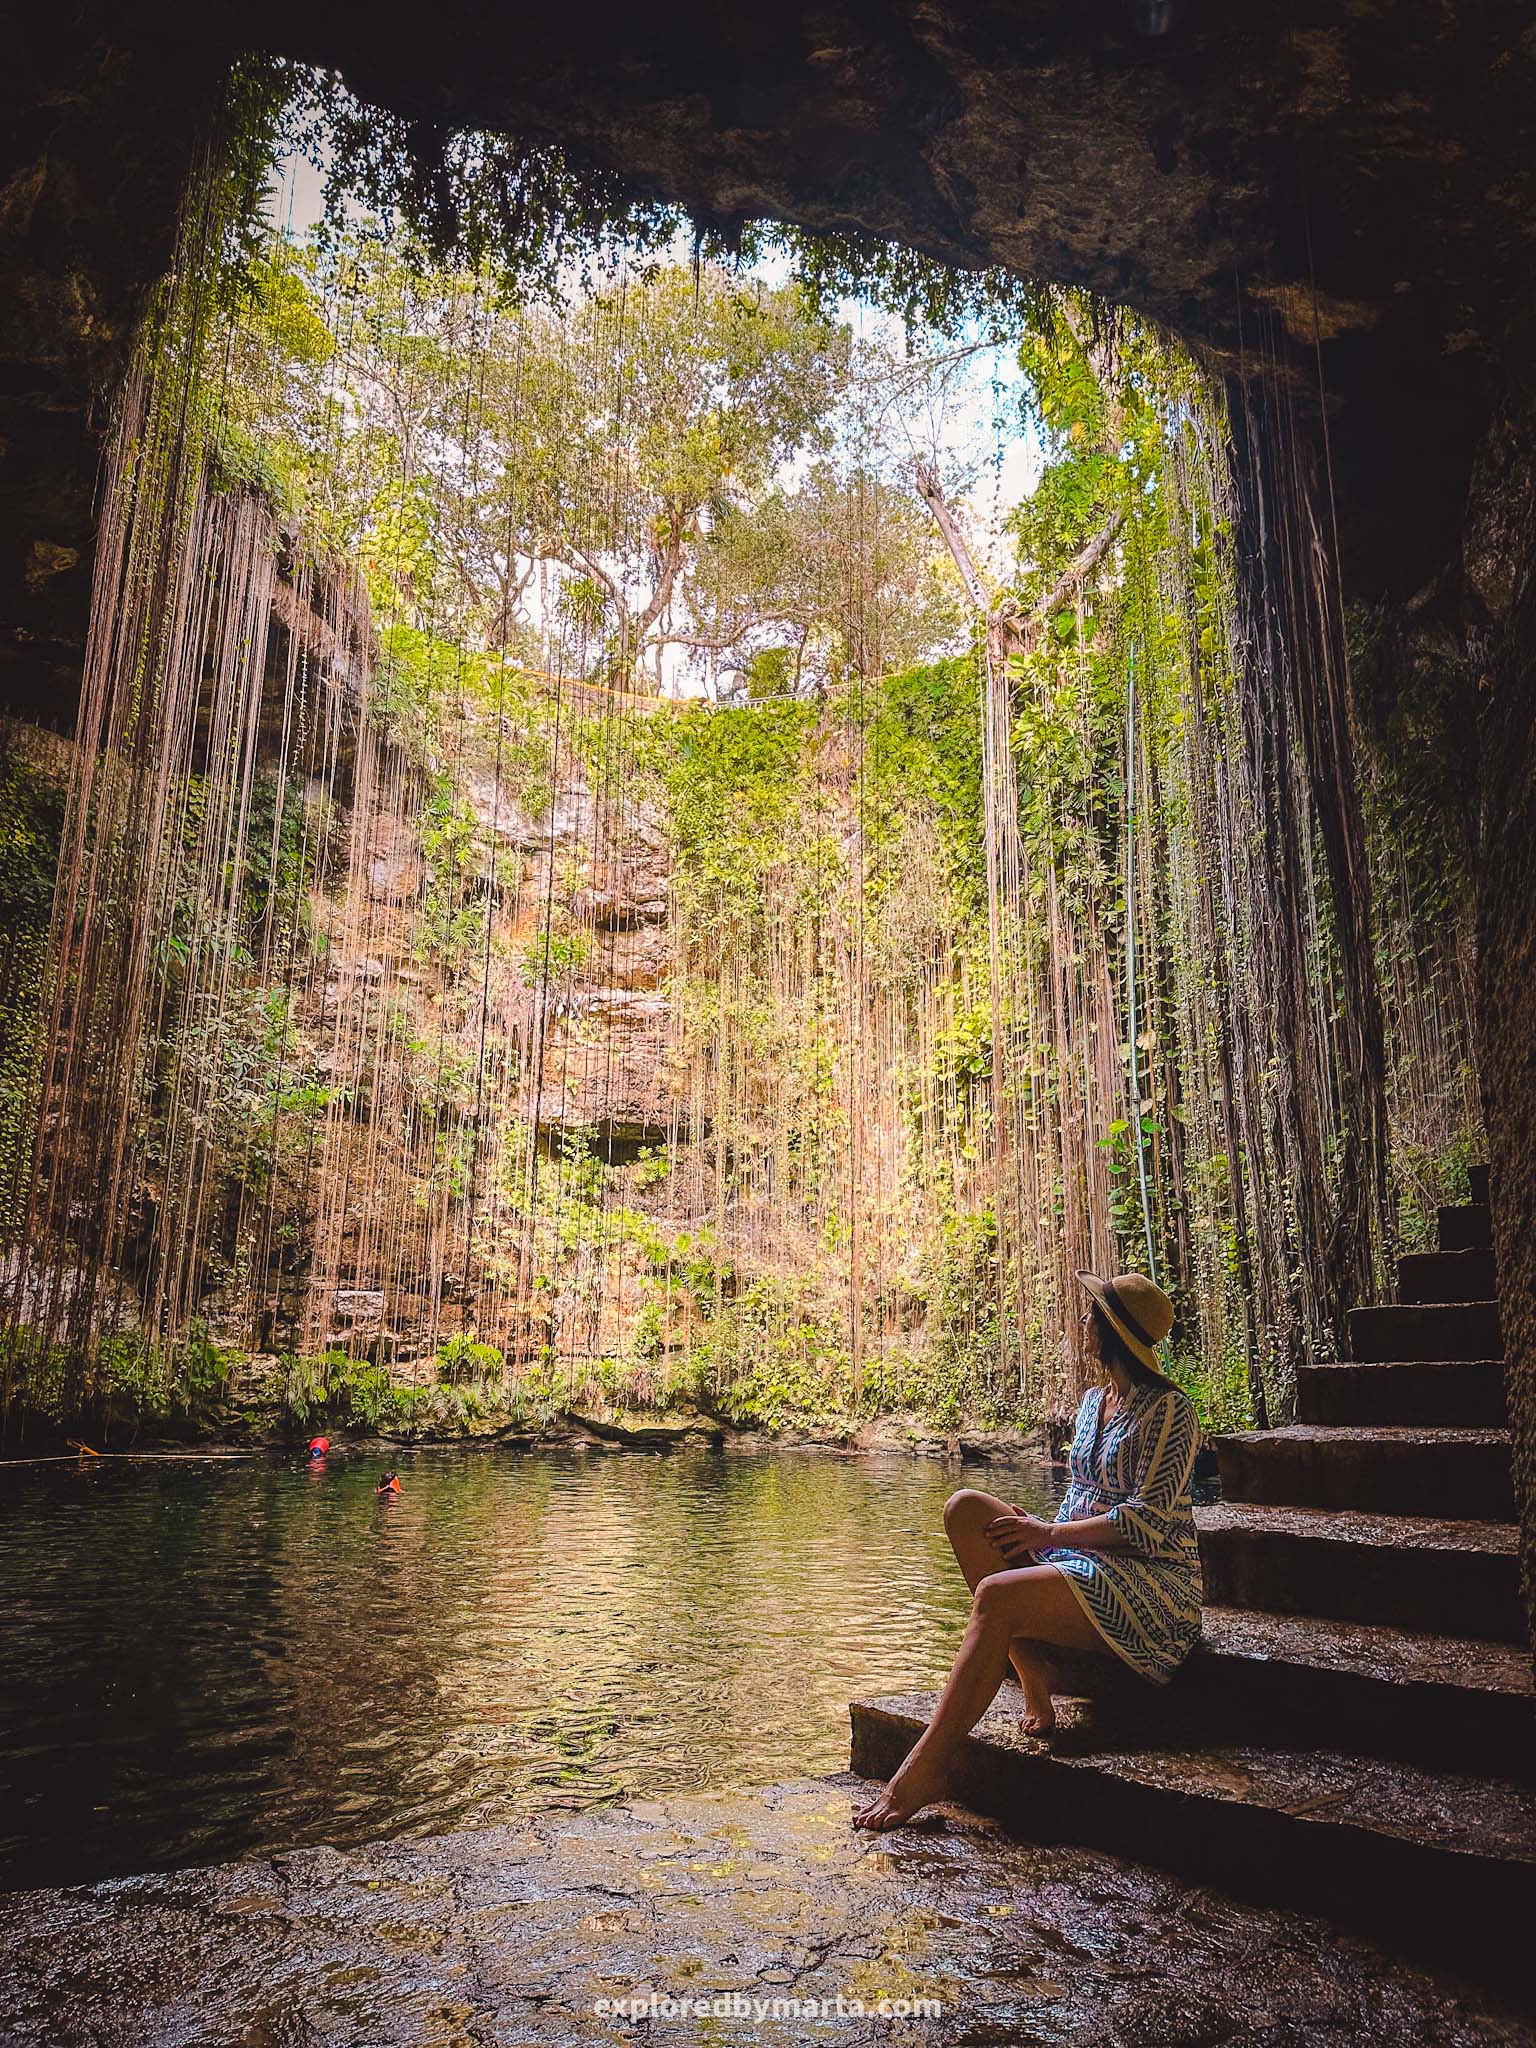 Valladolid, Mexico - most beautiful cenotes near Valladolid - Cenote Ik Kil